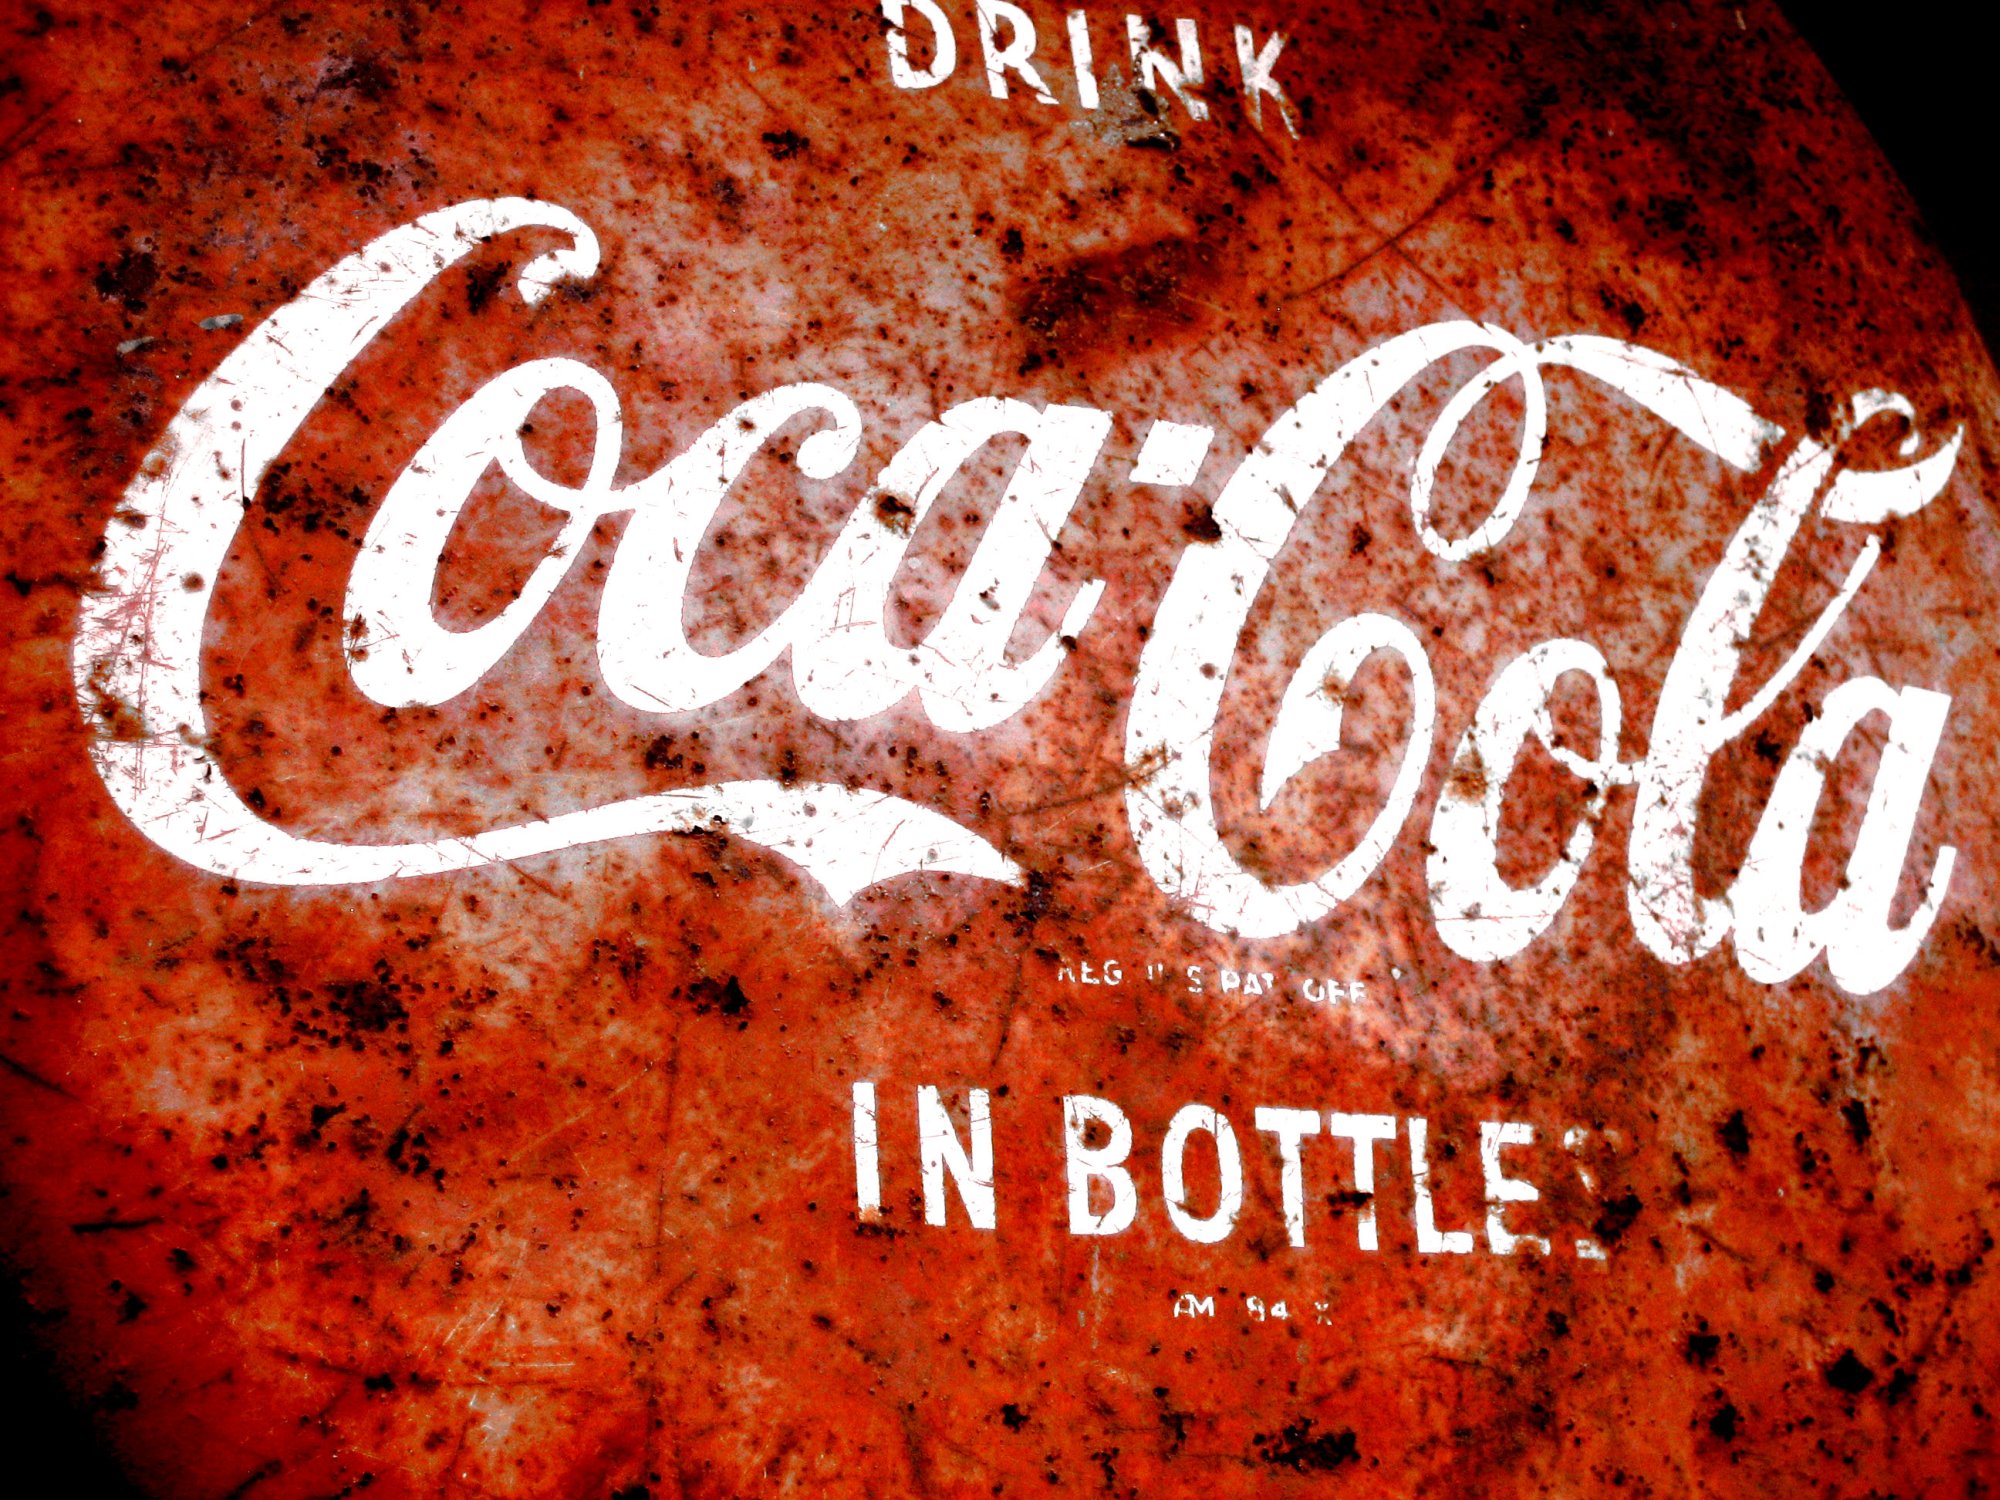 Coca Cola Collection